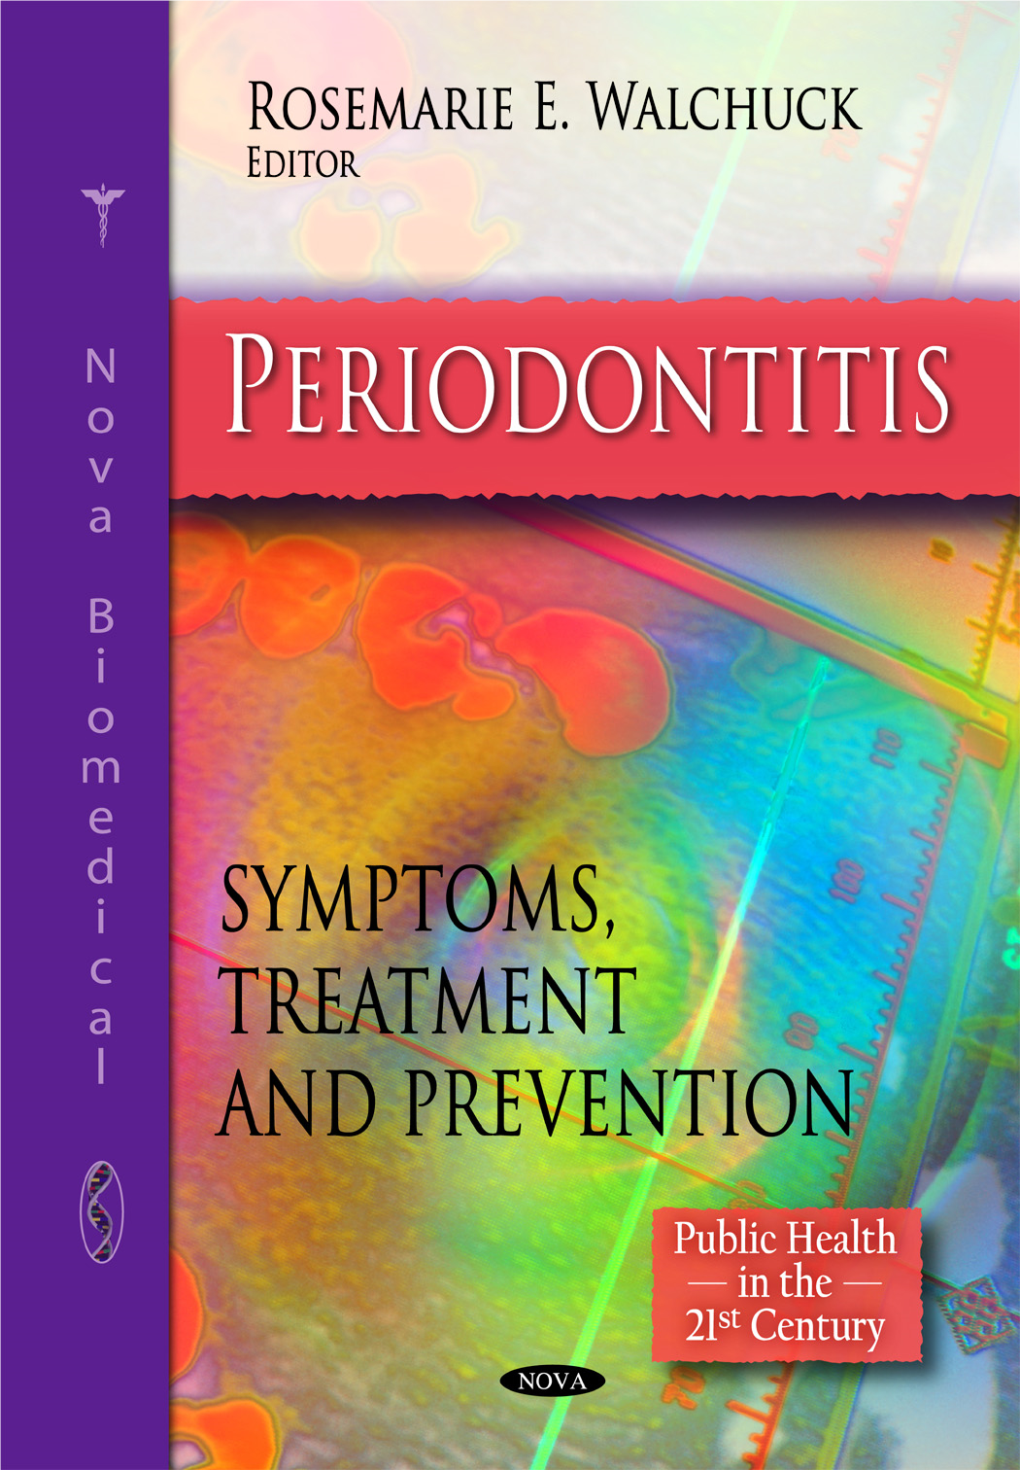 Periodontitis Symptoms, Treatment and Prevention ISBN: 978-1-61668-836-3 Editor: Rosemarie E